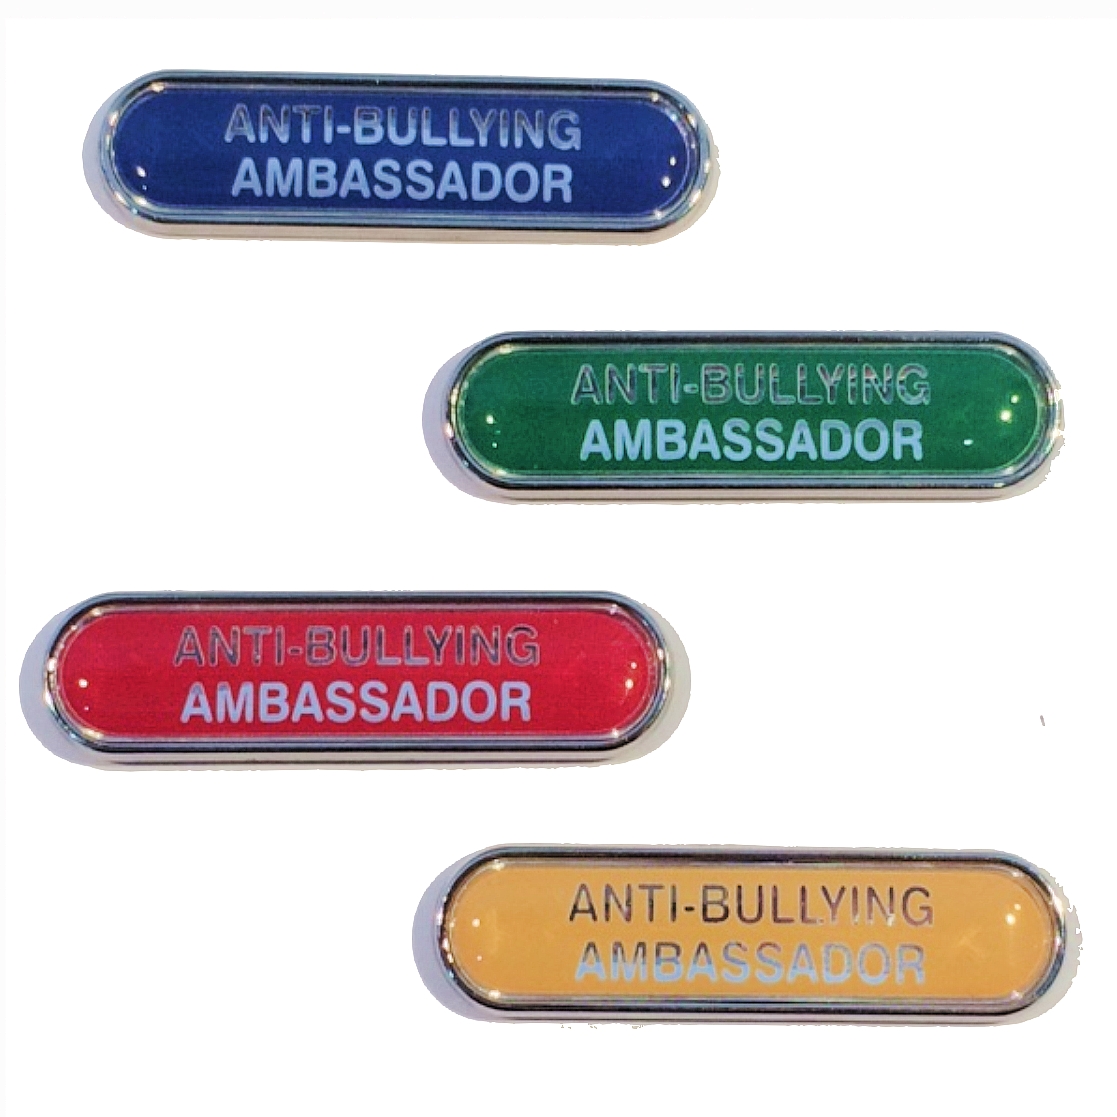 ANTI-BULLYING AMBASSADOR bar badge